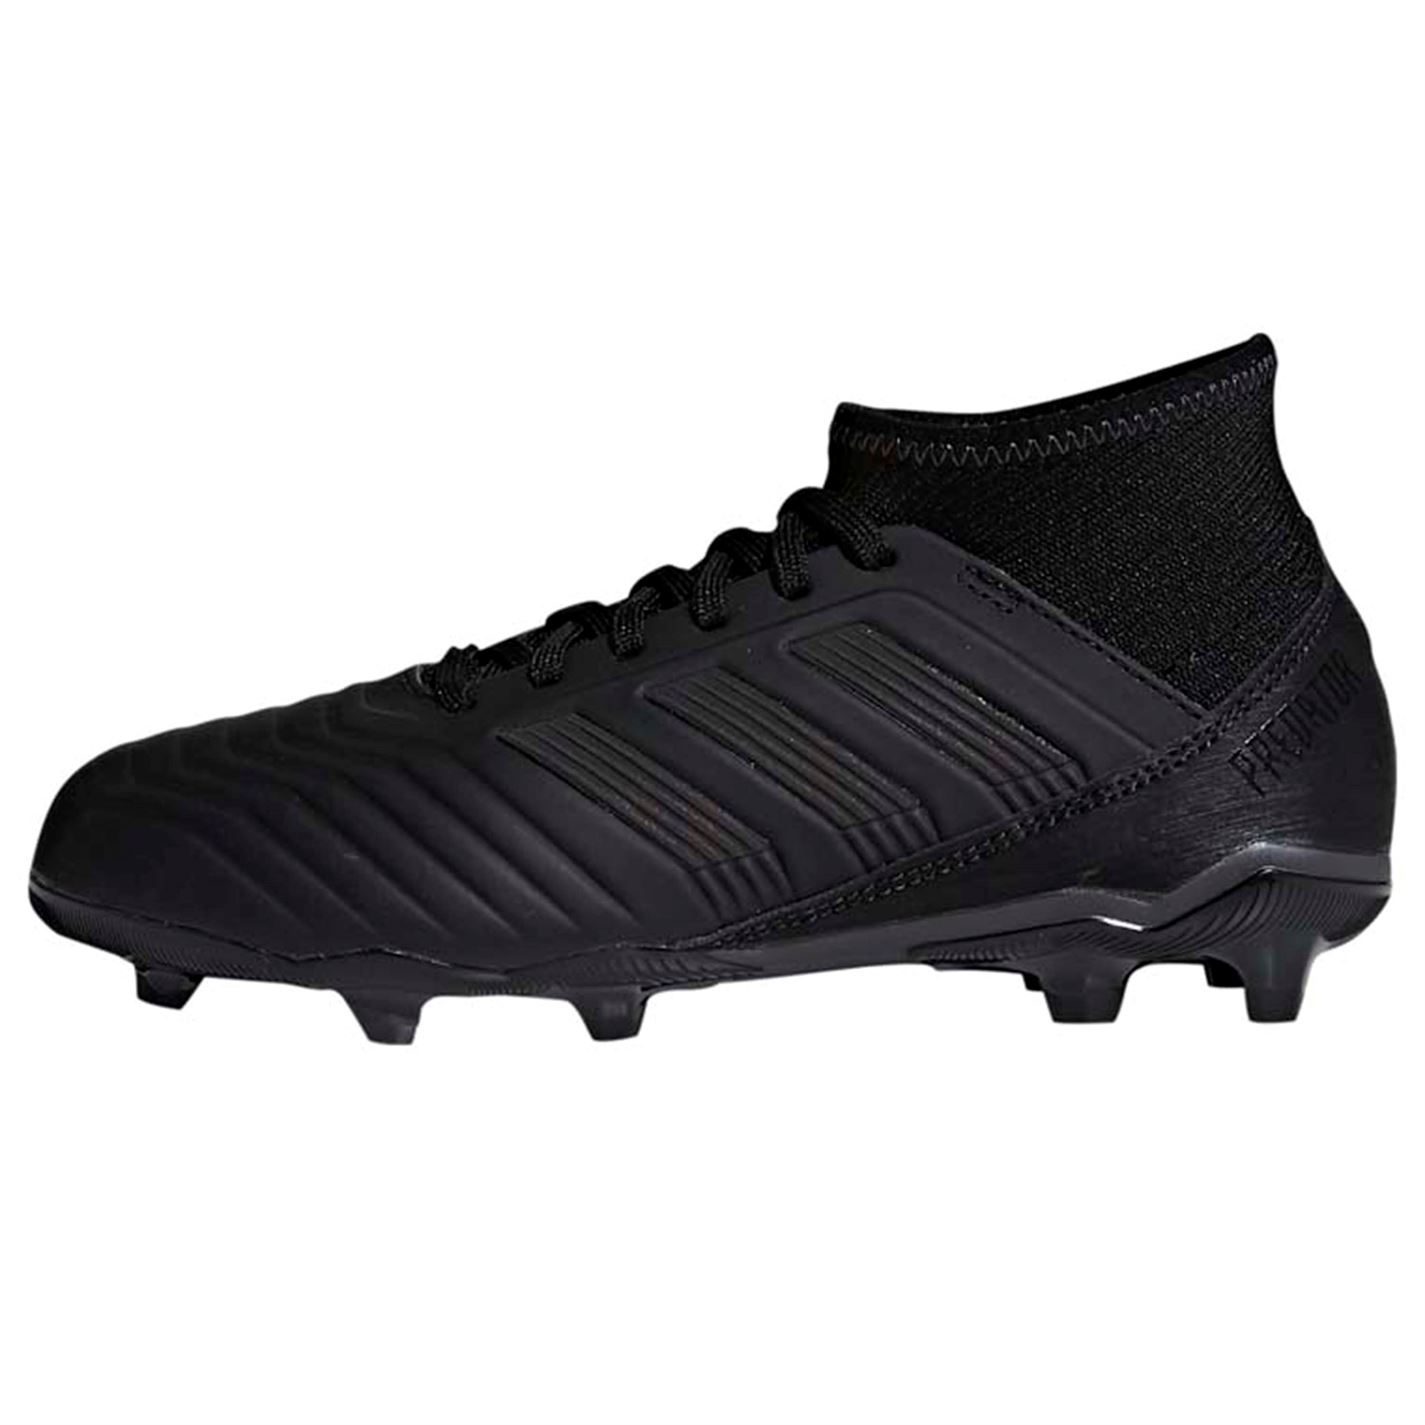 Adidas Predator 18.3 Junior FG Football Boots